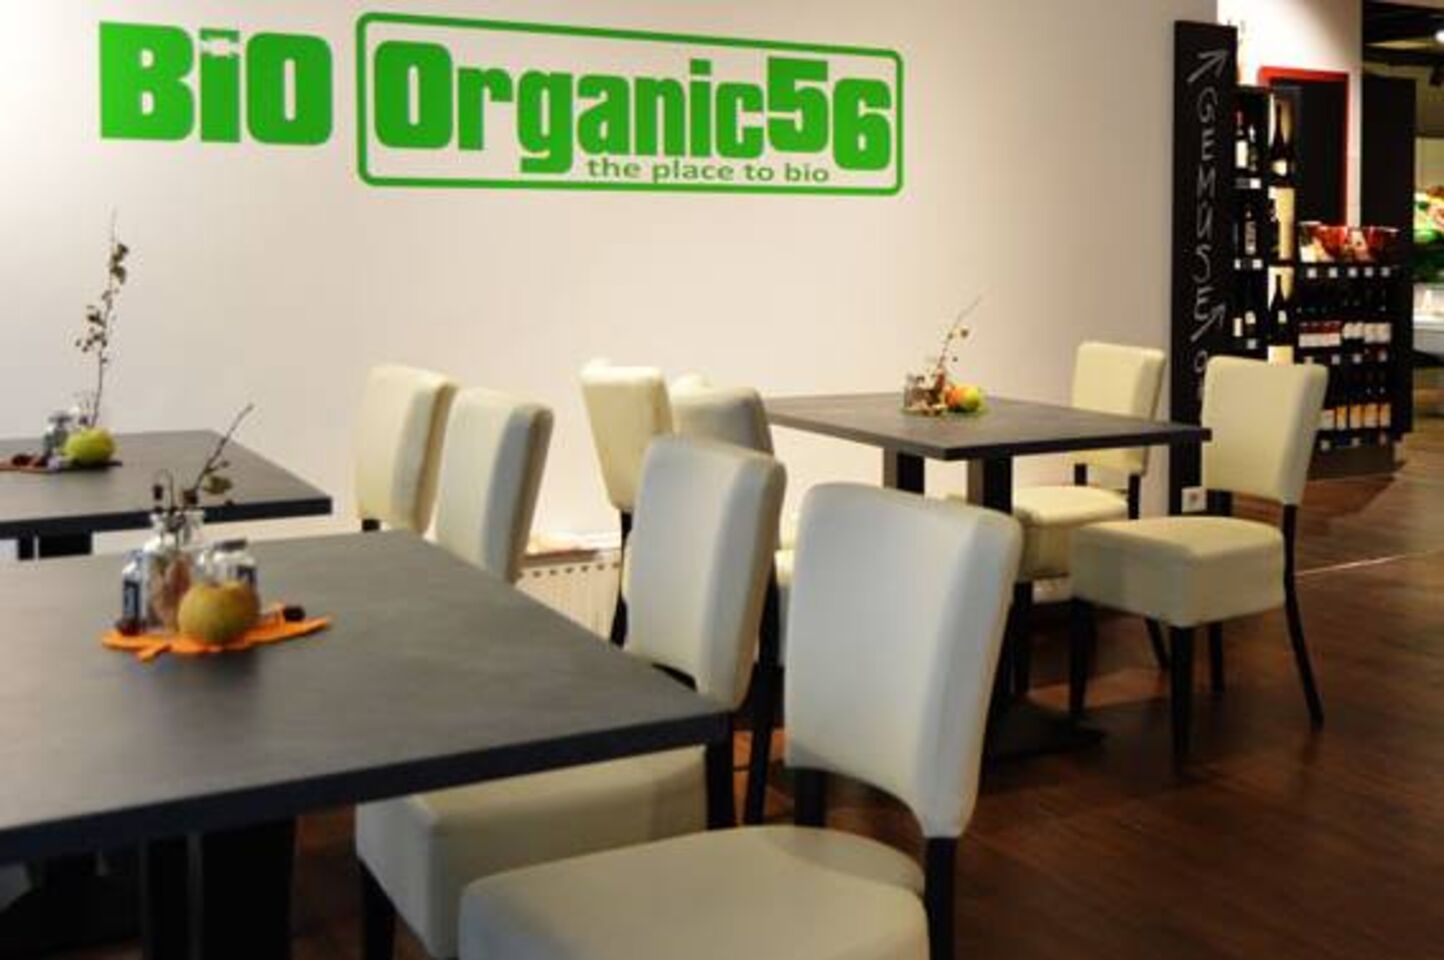 A photo of BIO Organic56